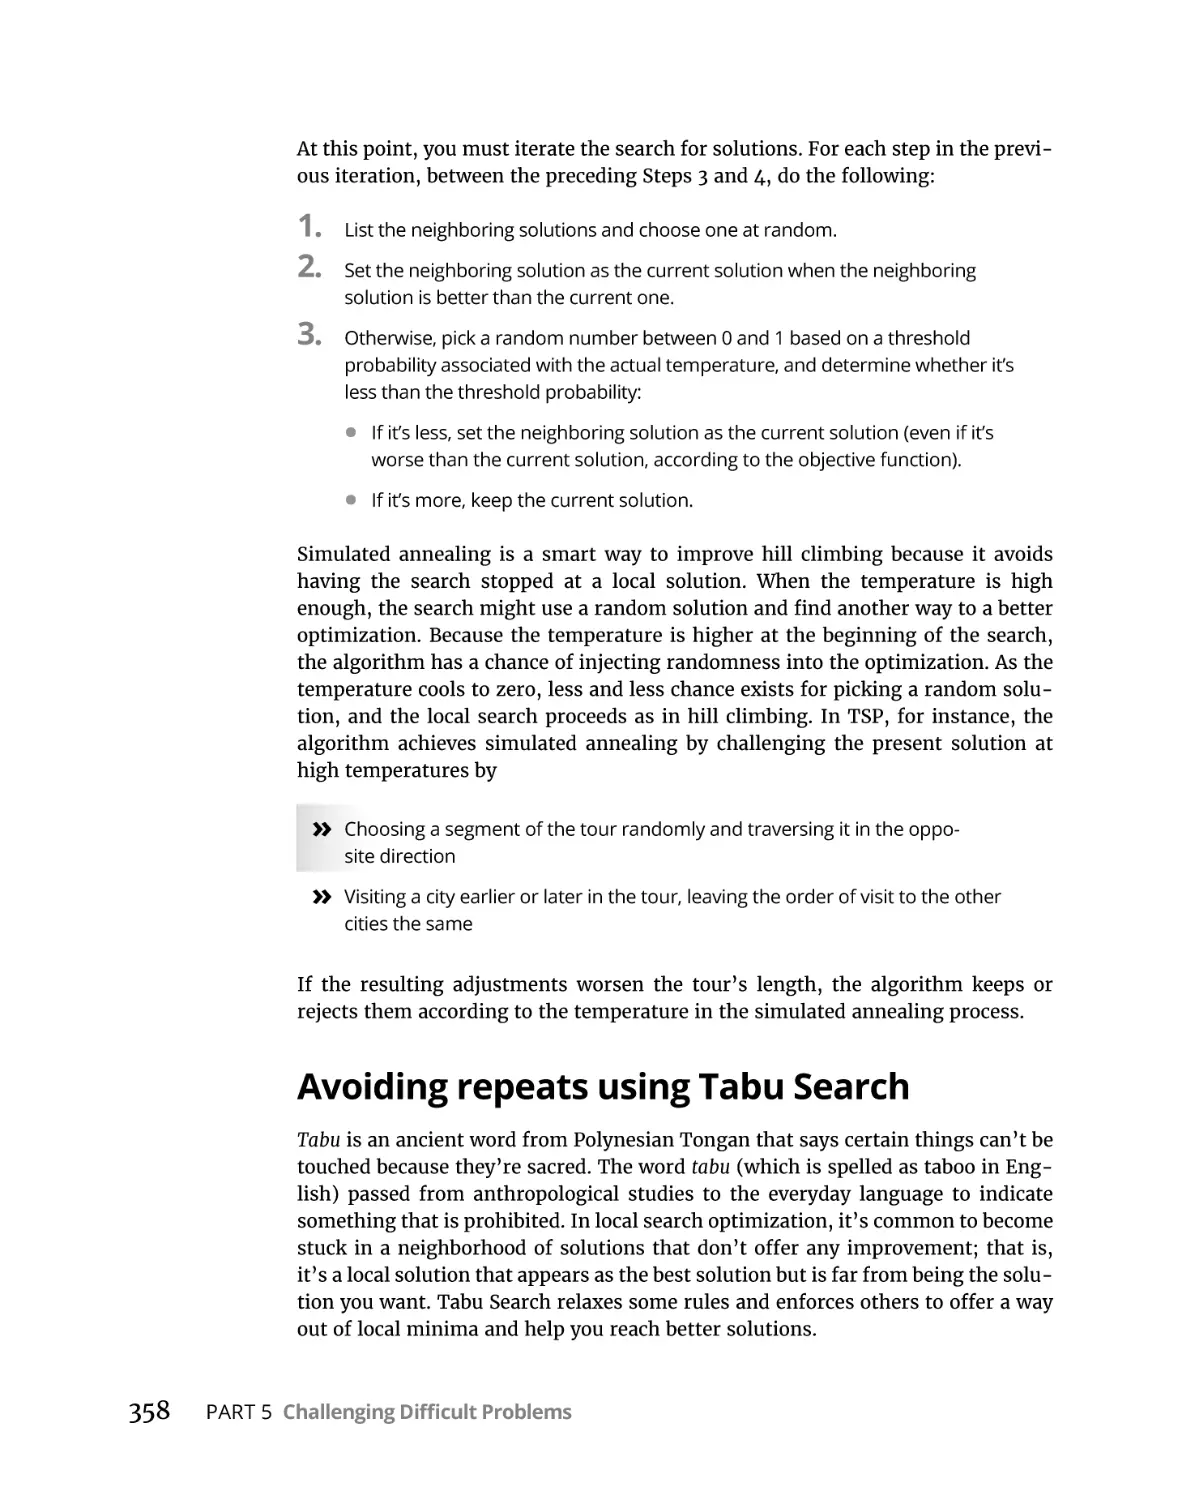 Avoiding repeats using Tabu Search